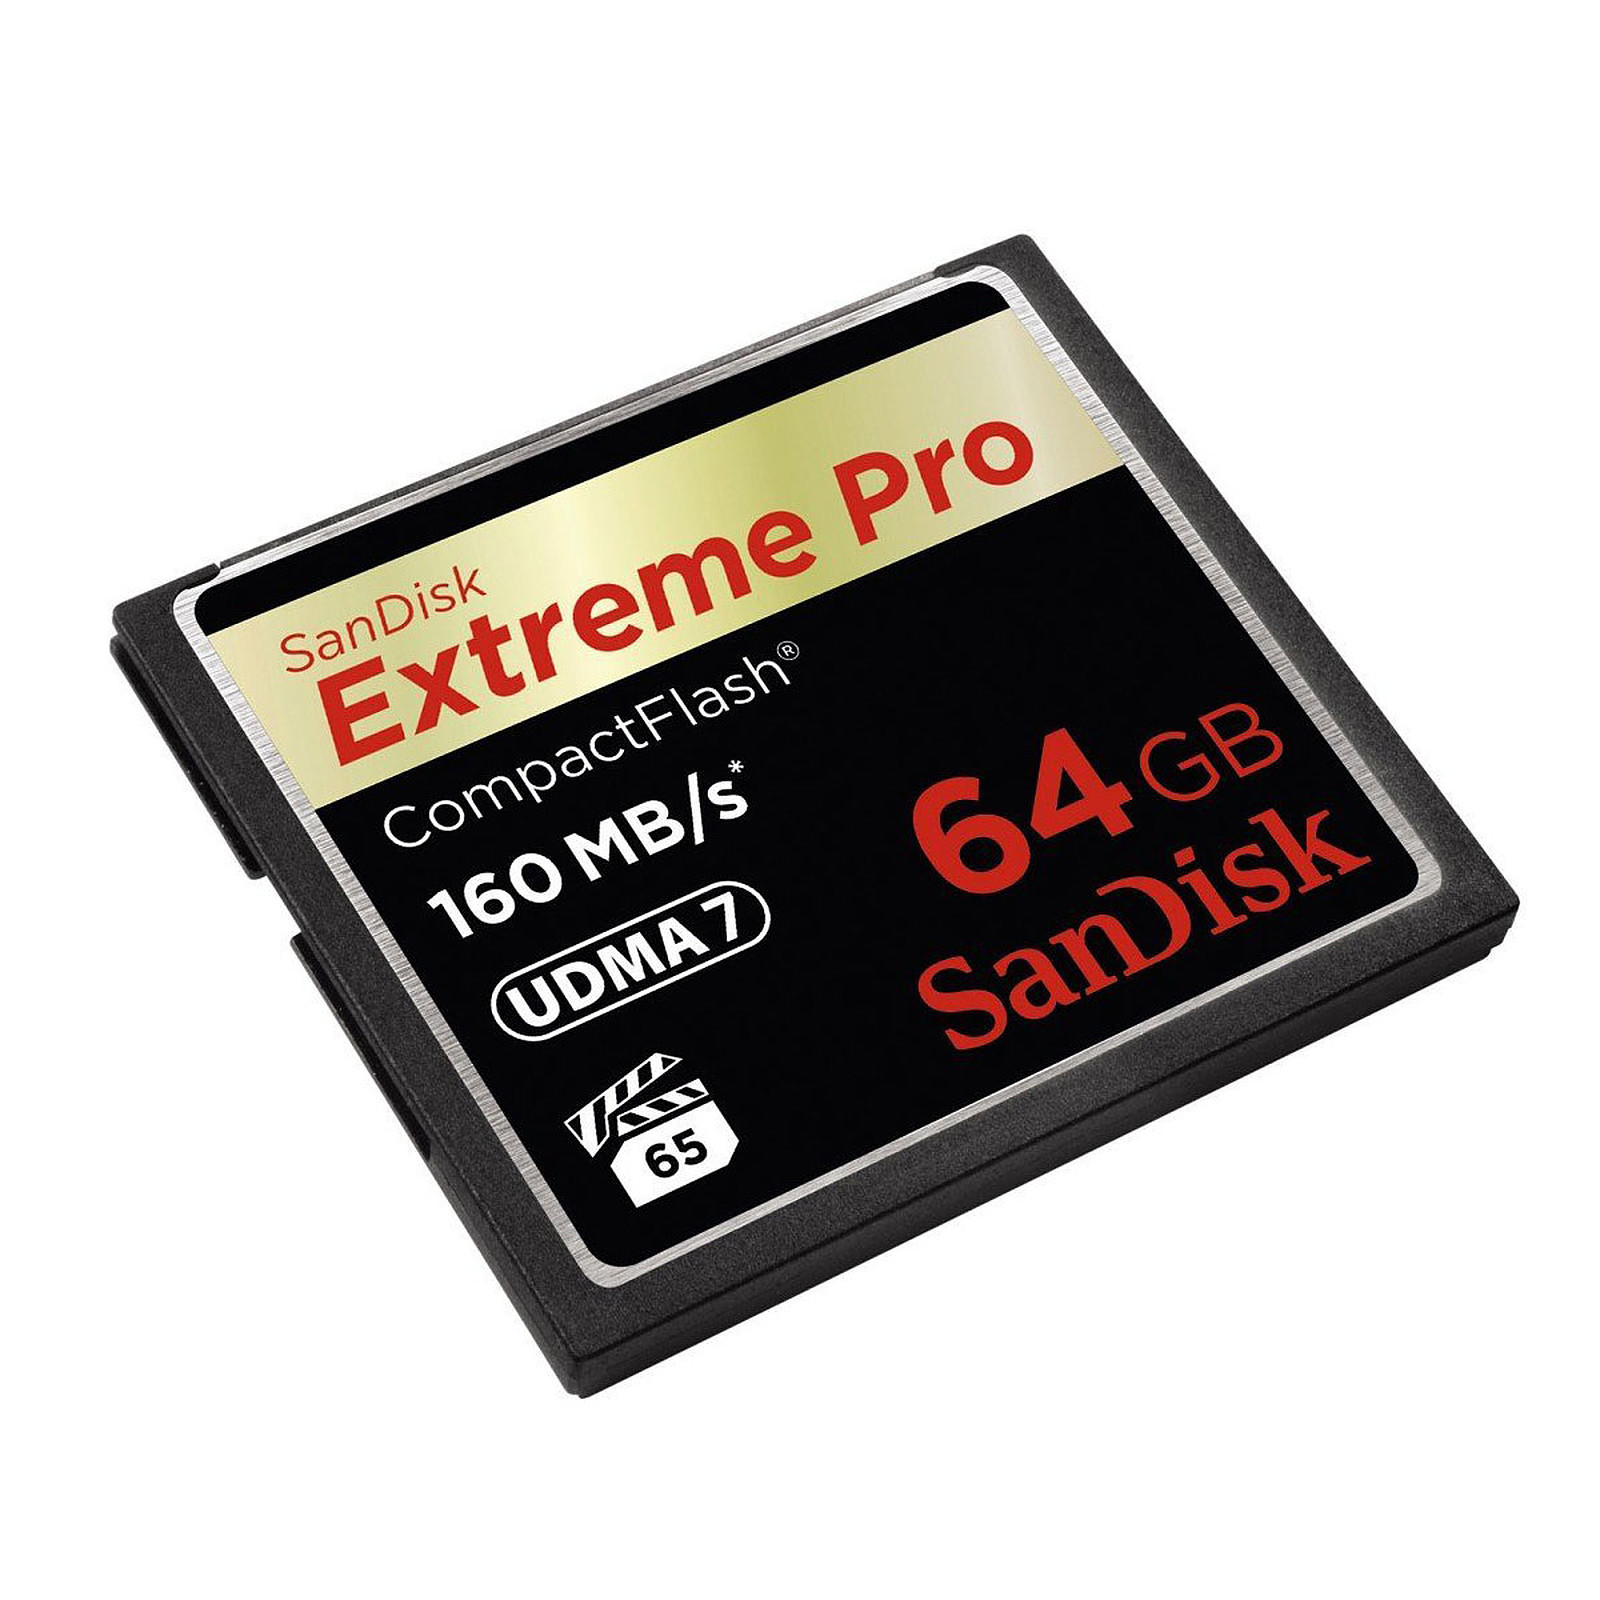 SanDisk Carte memoire Extreme Pro CompactFlash 64 Go - Carte memoire Sandisk